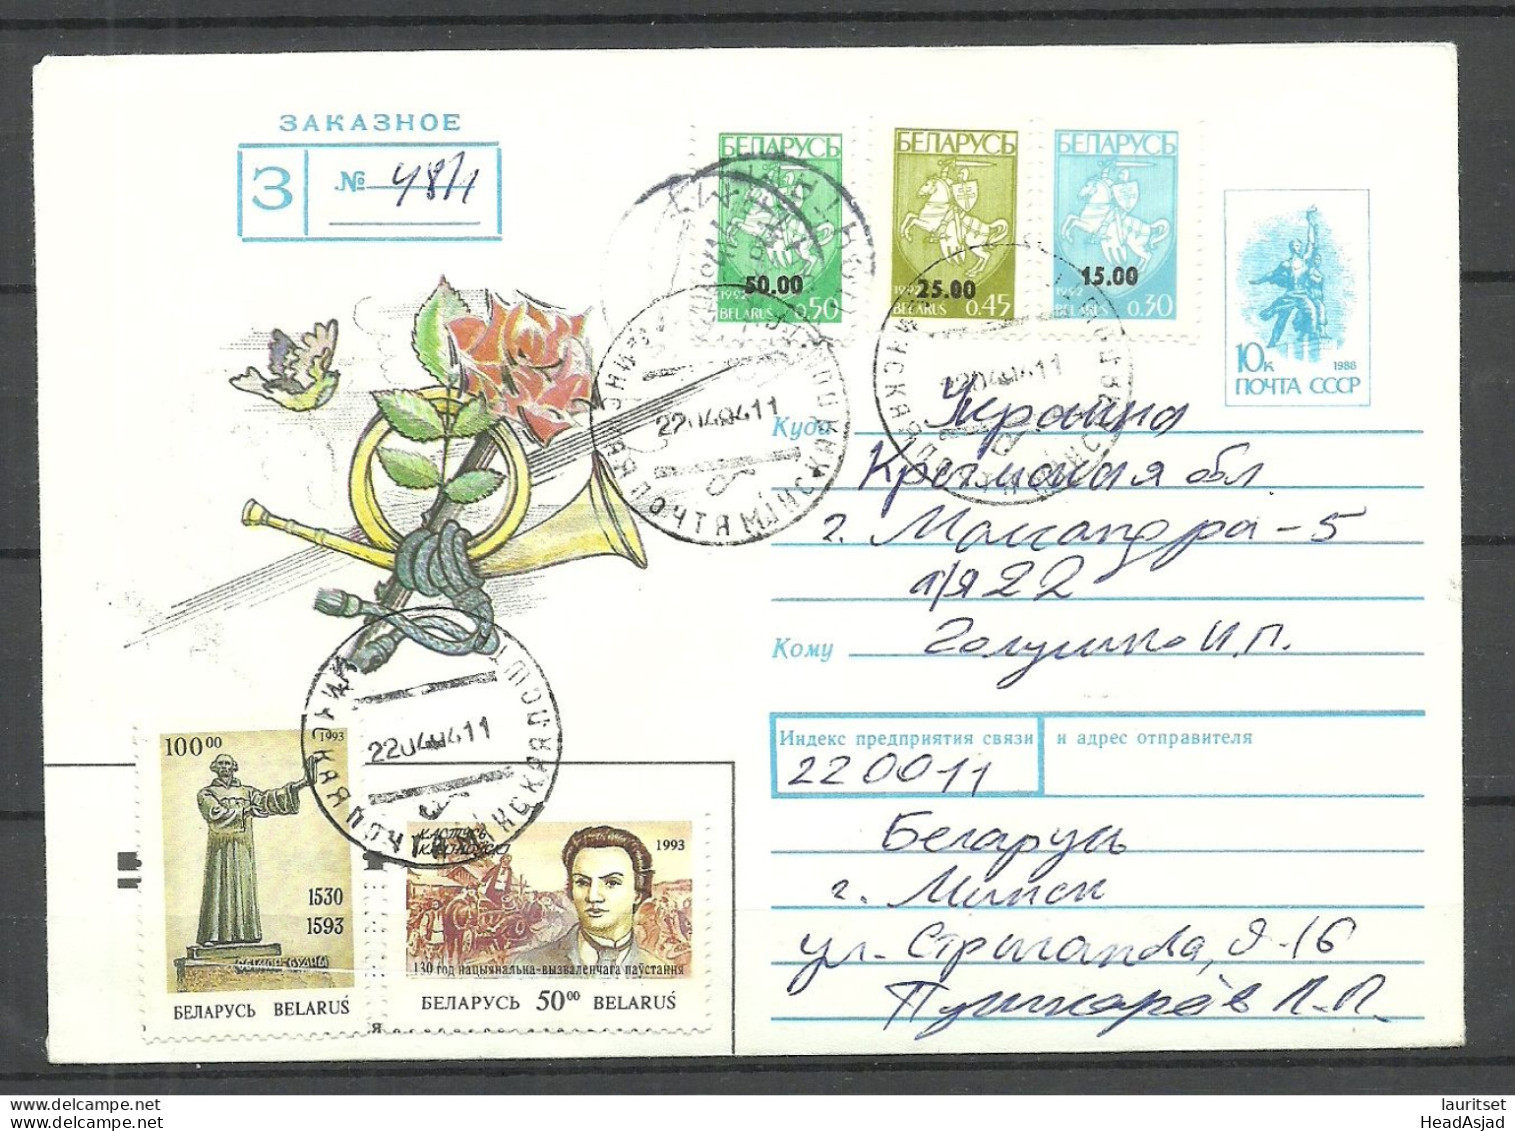 Belarus Weissrussland 1994 Postal Stationery Provisional Hand-stamp Overprint Registered Letter - Bielorrusia